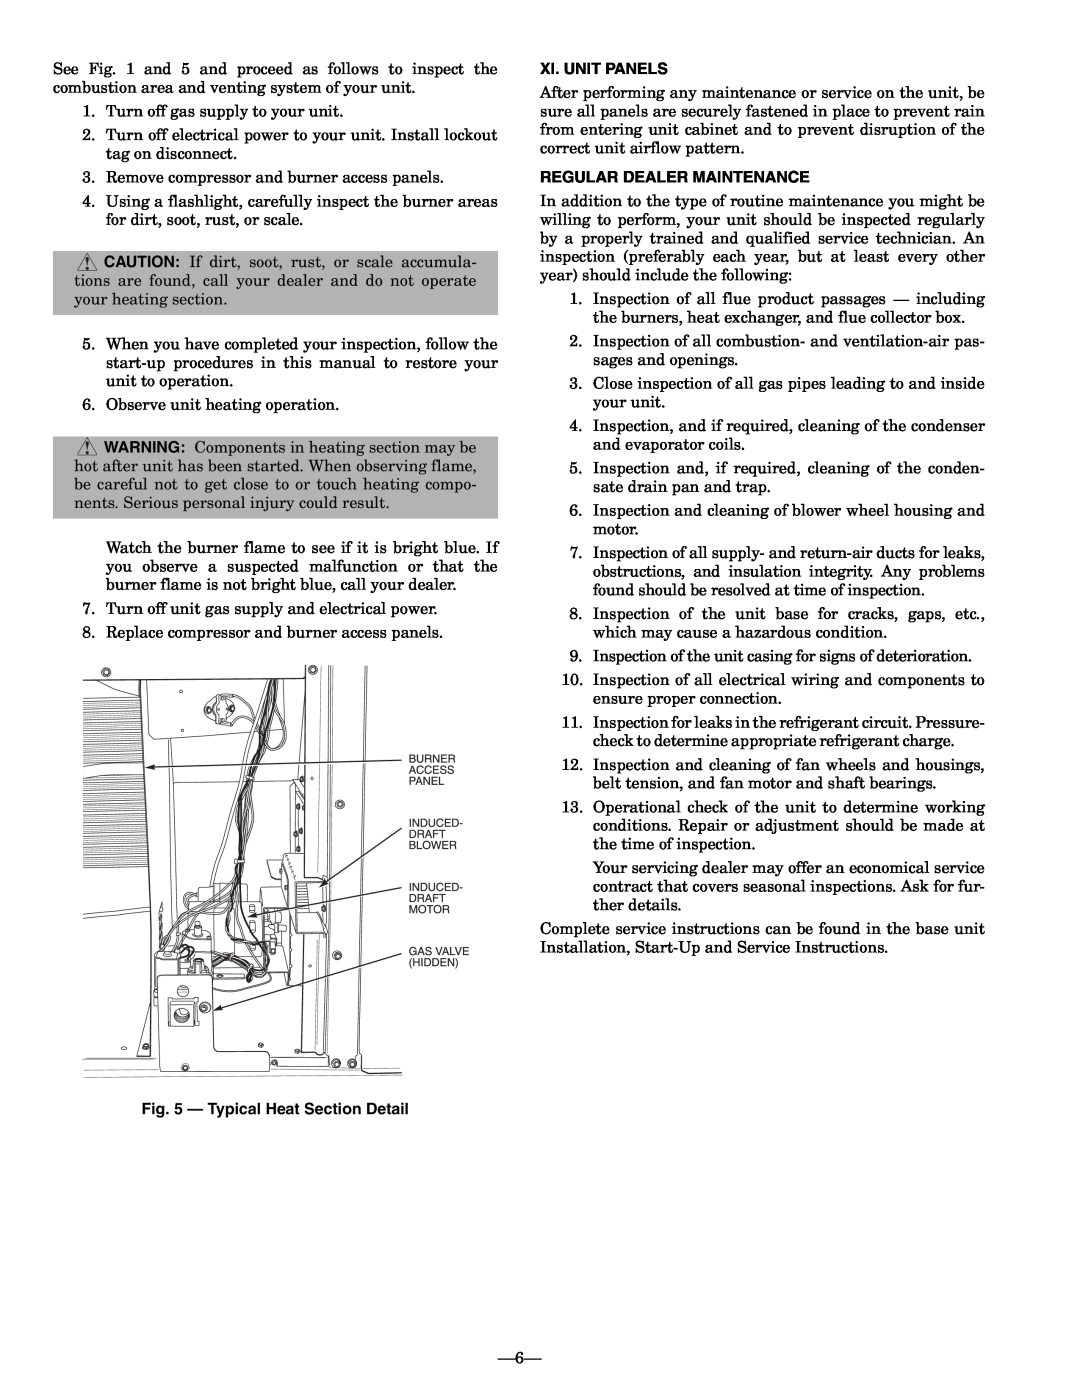 Bryant OM11-19 manual Xi. Unit Panels, Regular Dealer Maintenance, Typical Heat Section Detail 